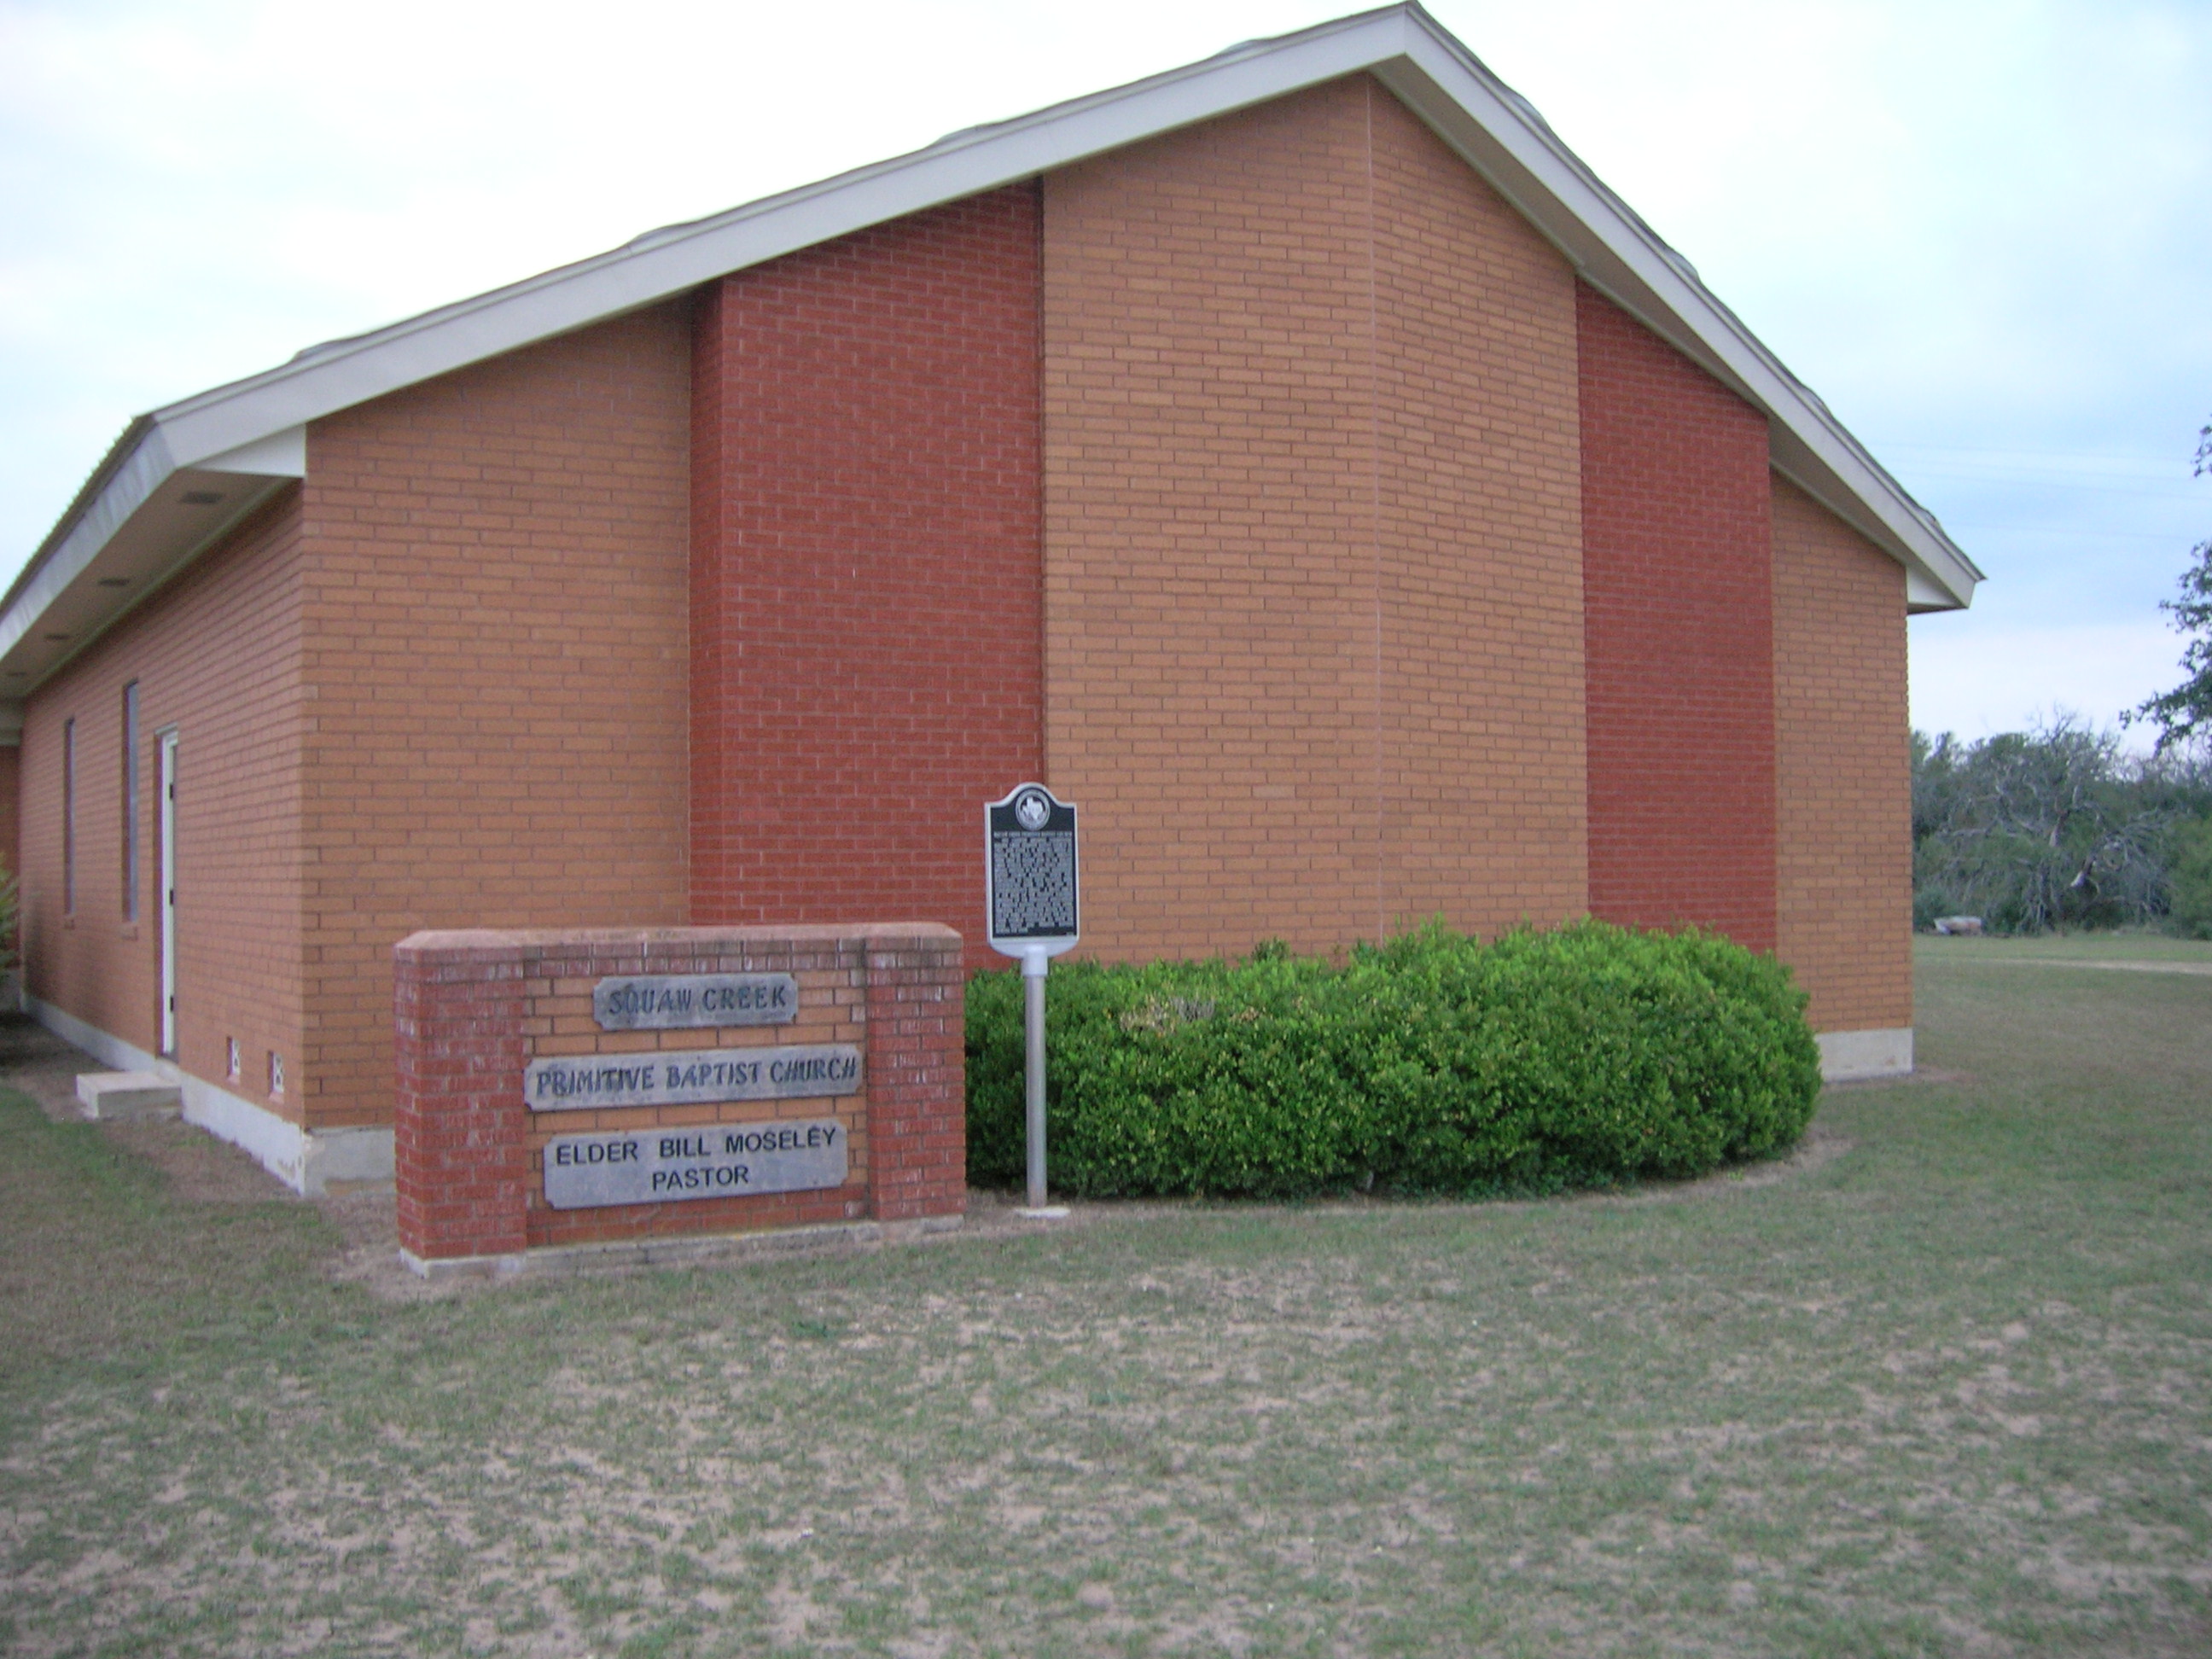 Squaw Creek Primitive Baptist Church